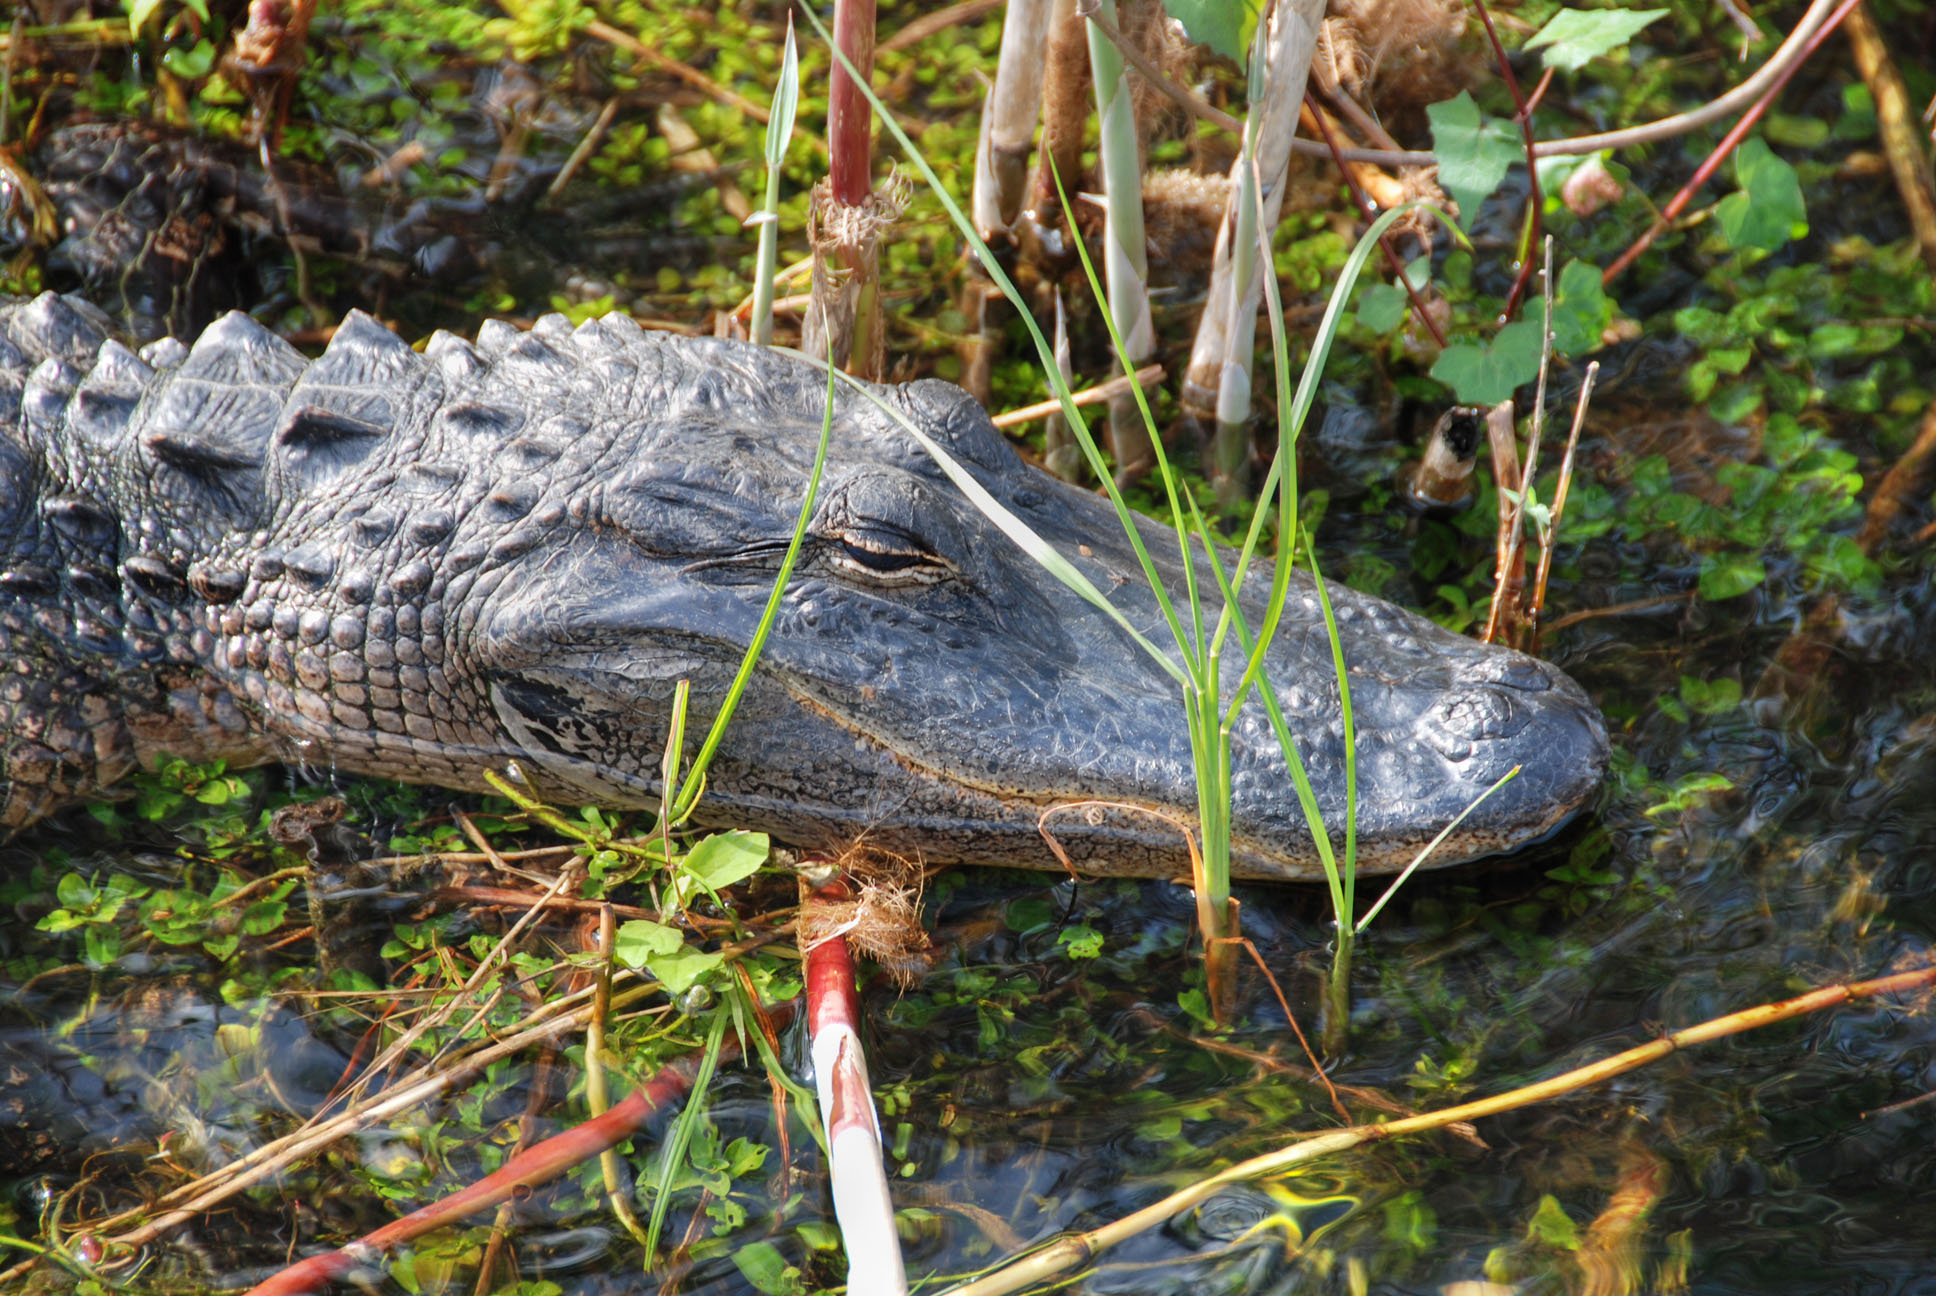 Sleeping crocodile, everglades, florida photo